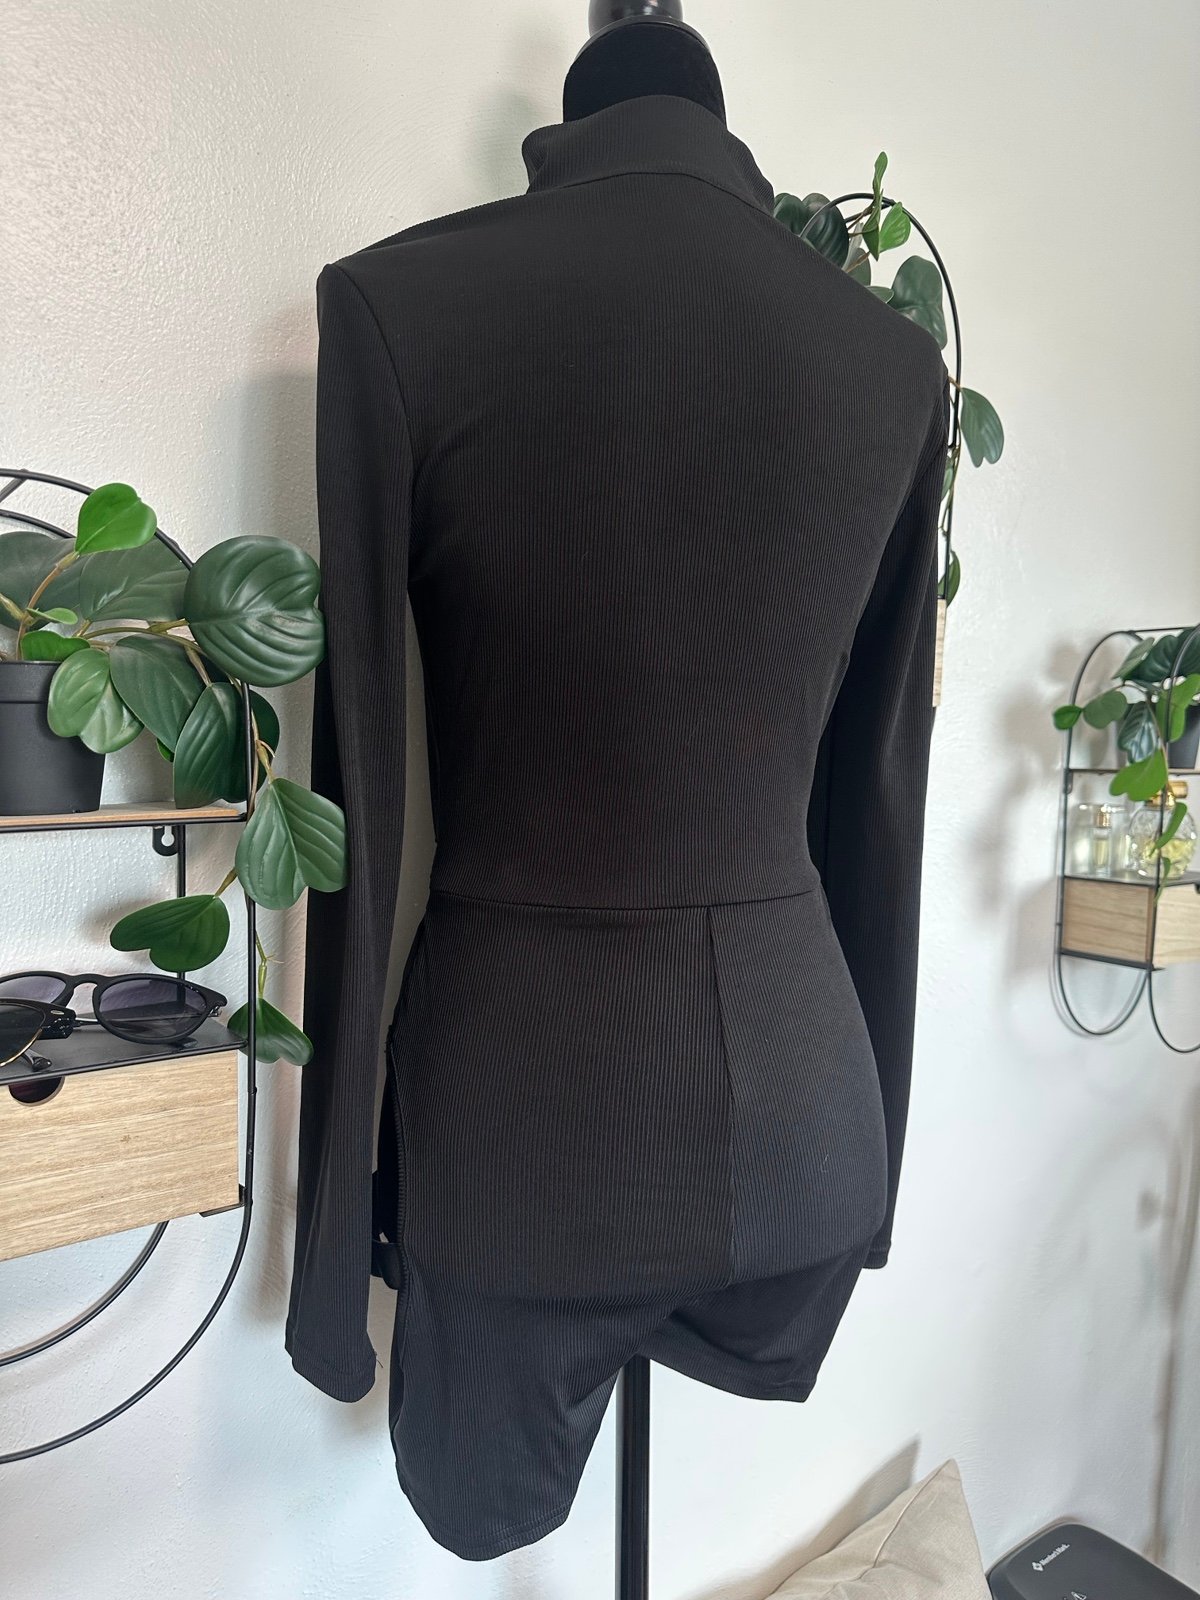 the Lowest price Black Bodysuit Lz6sf6JqG Online Exclusive